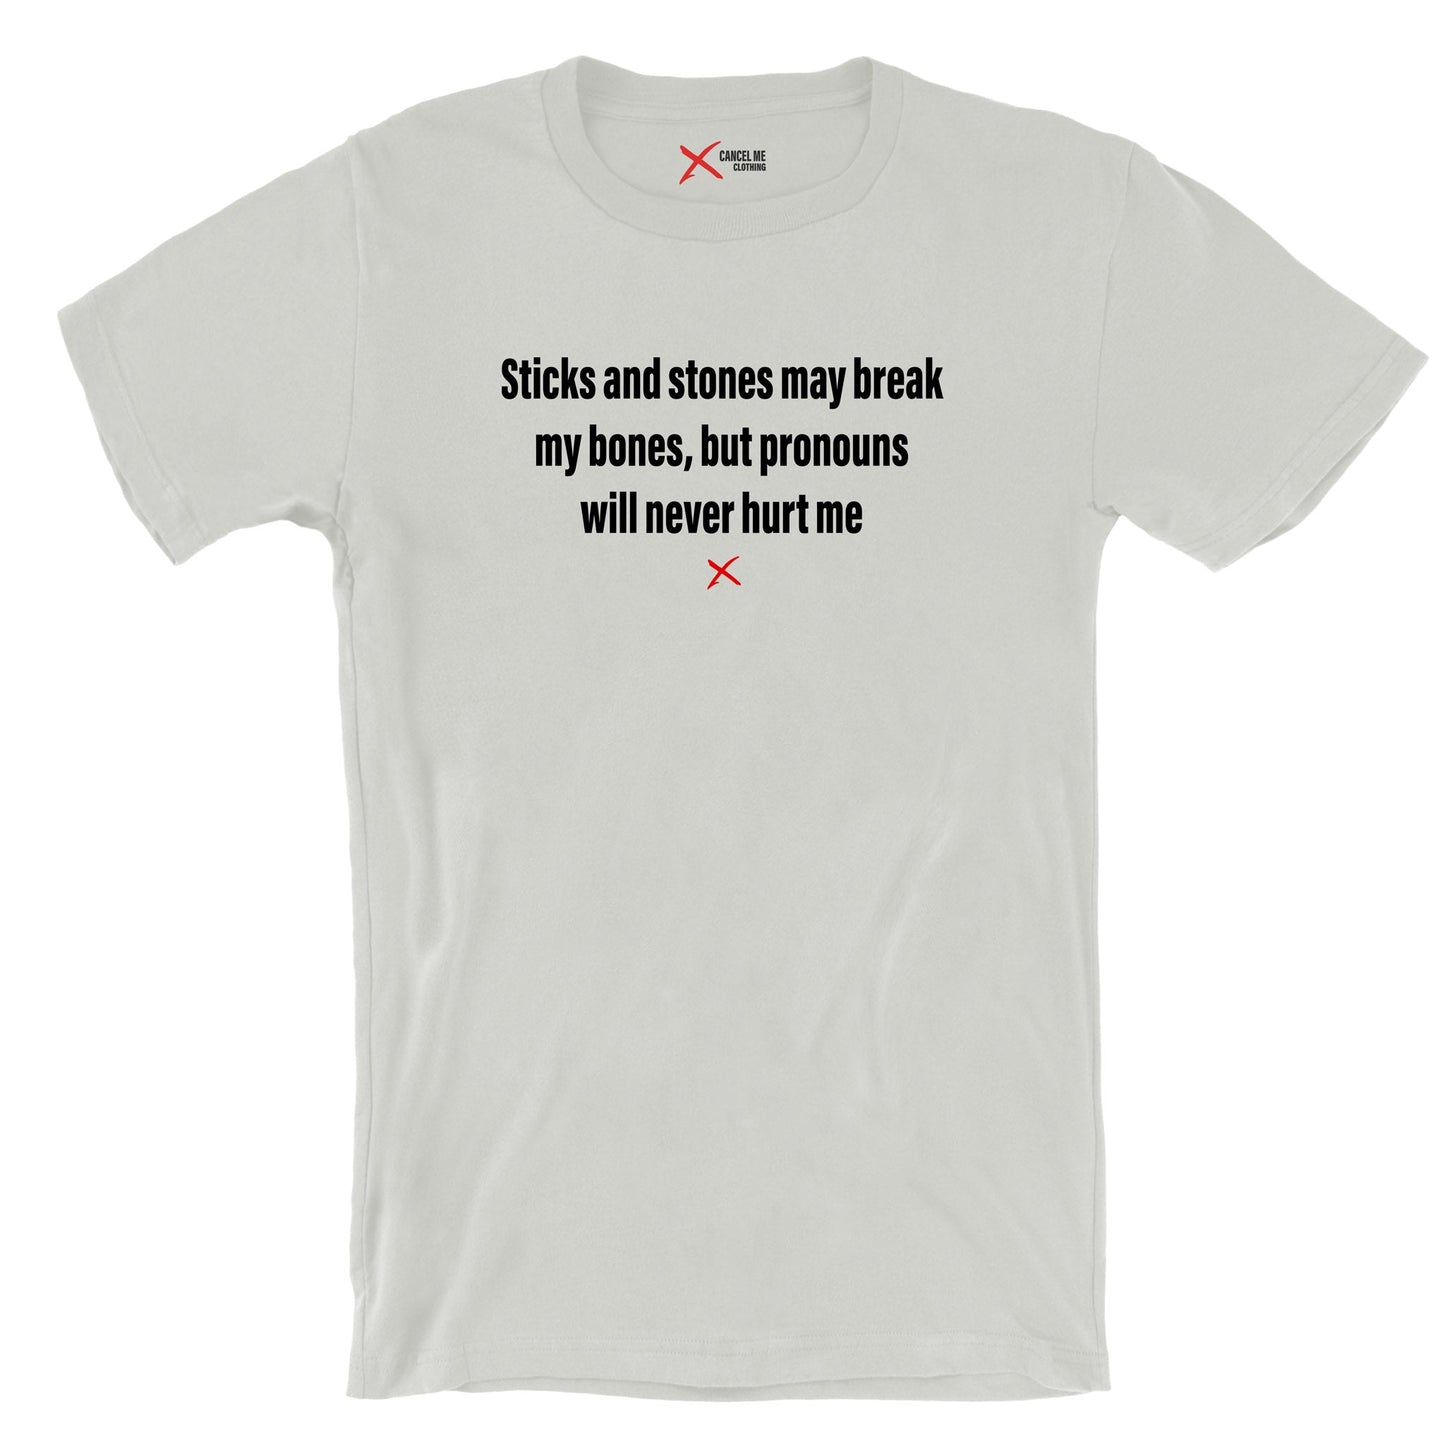 Sticks and stones may break my bones, but pronouns will never hurt me - Shirt